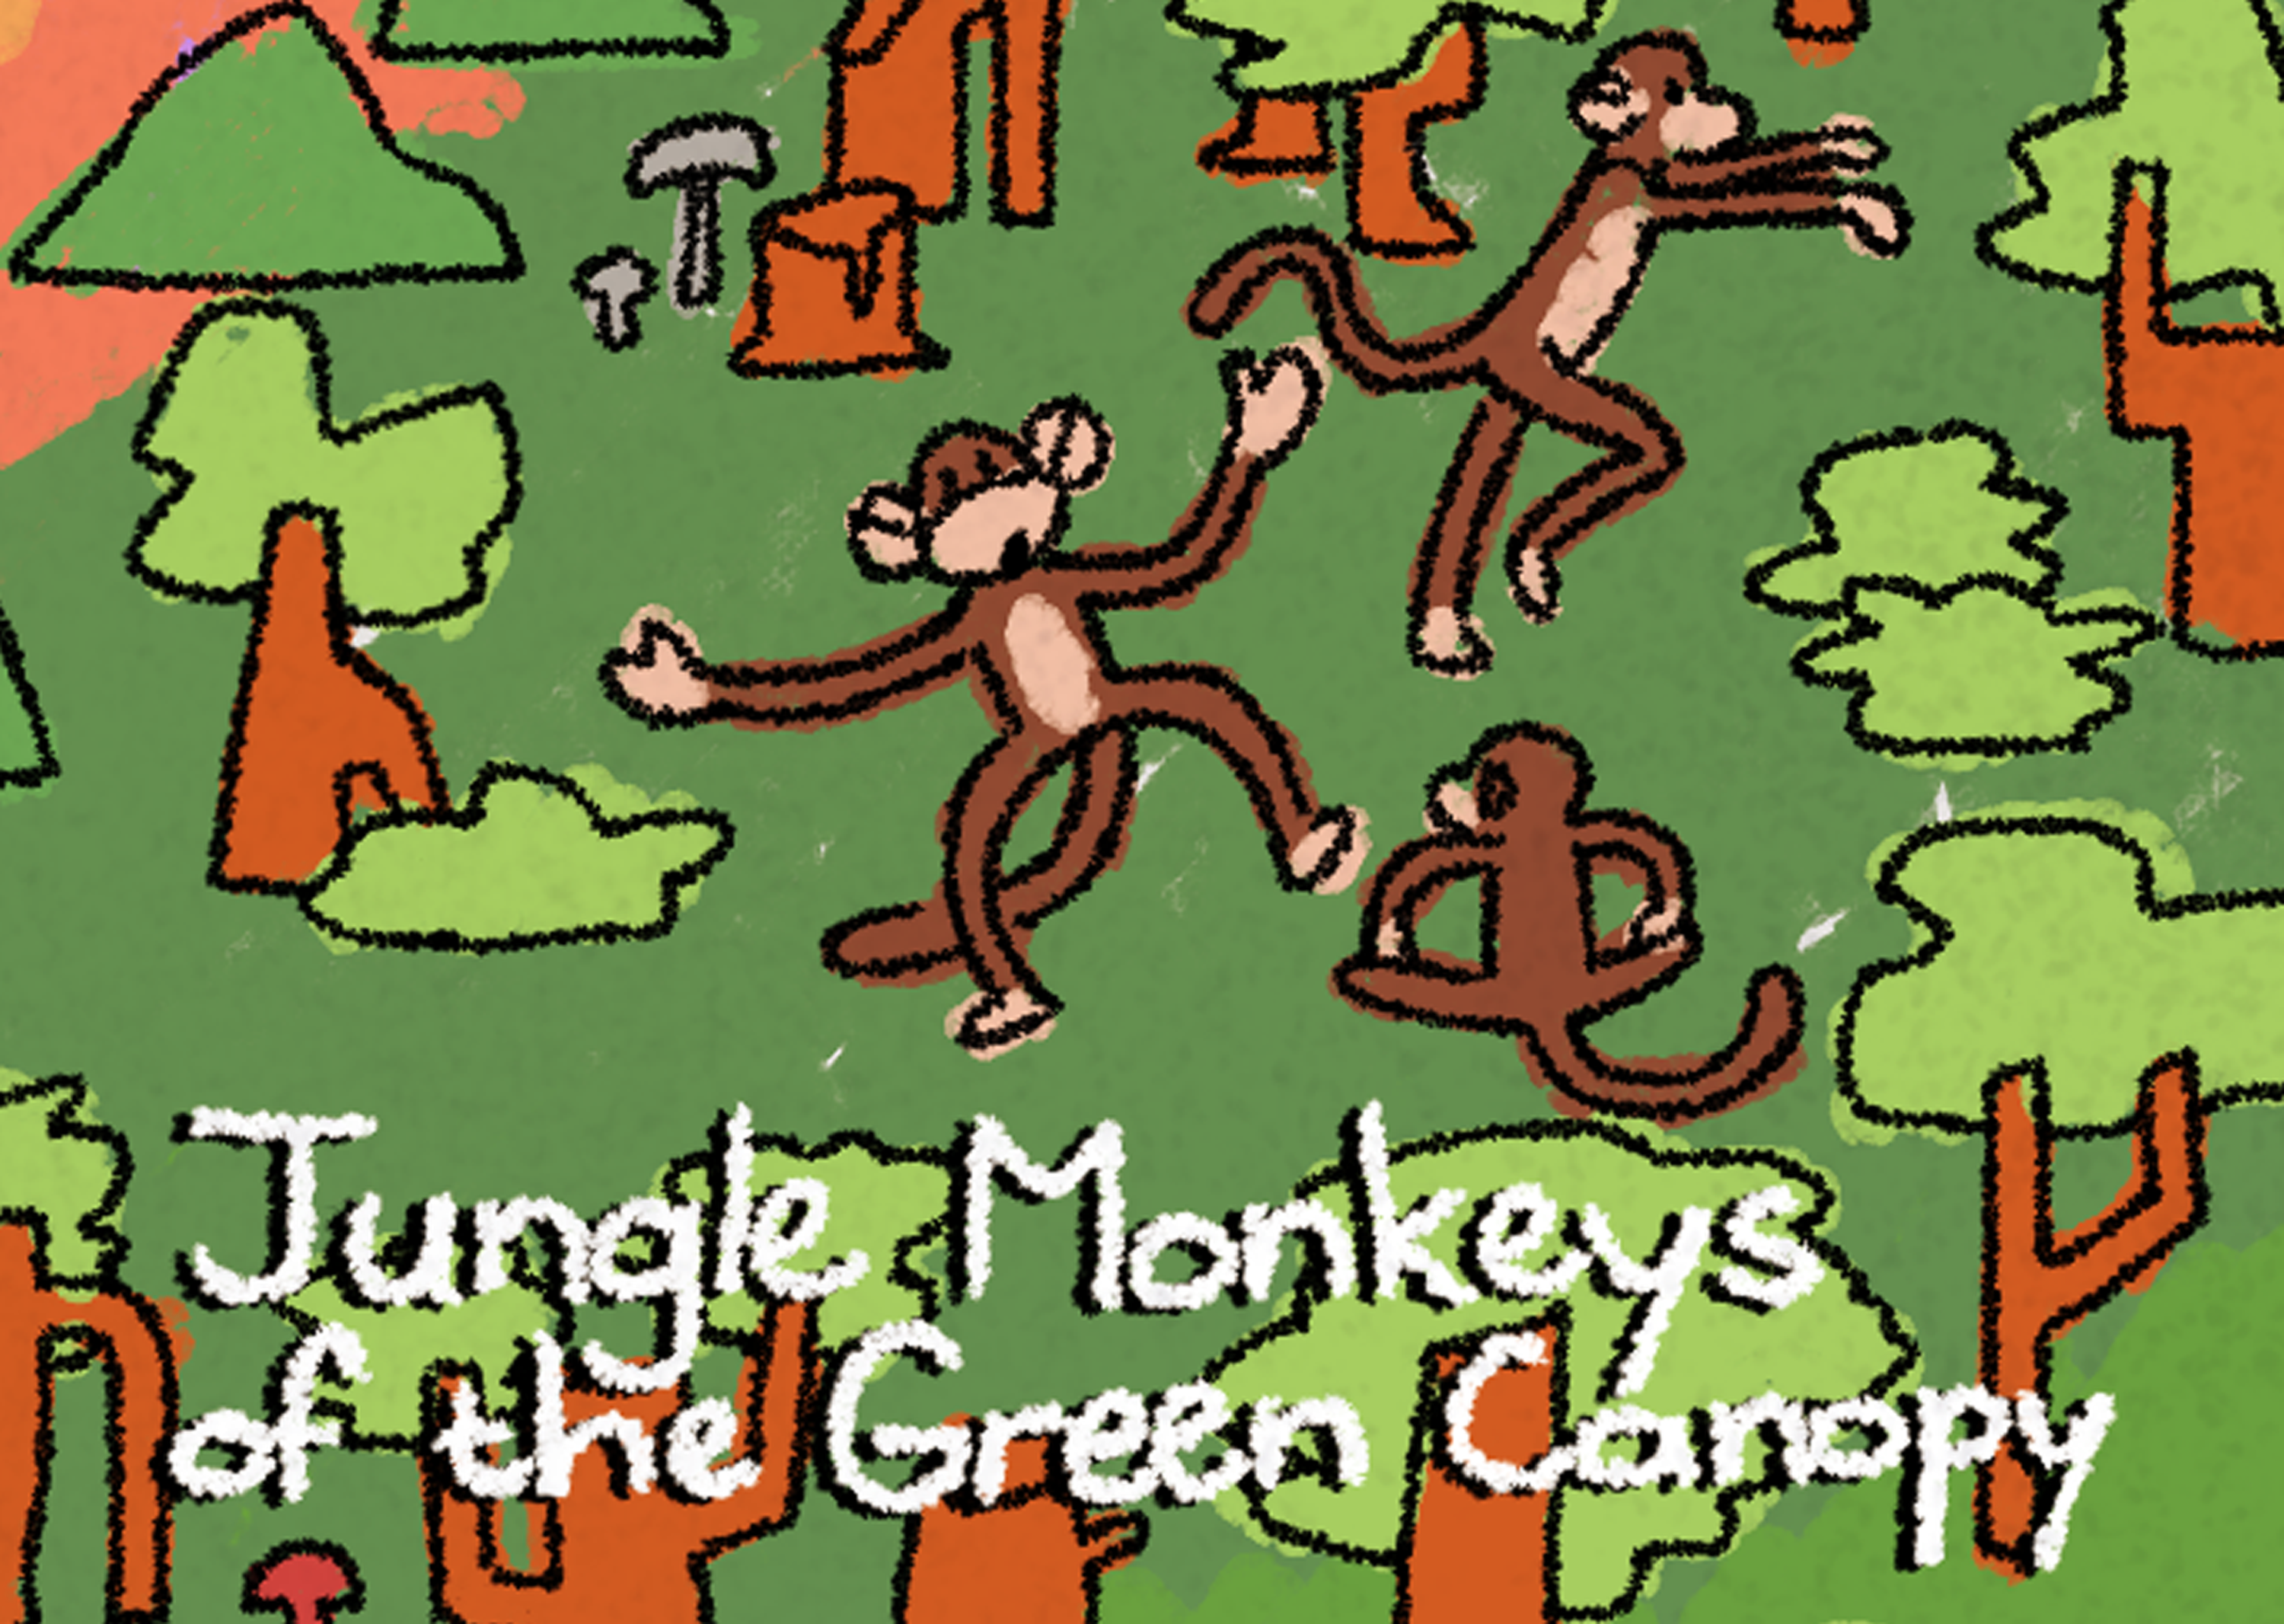 The Jungle Monkeys